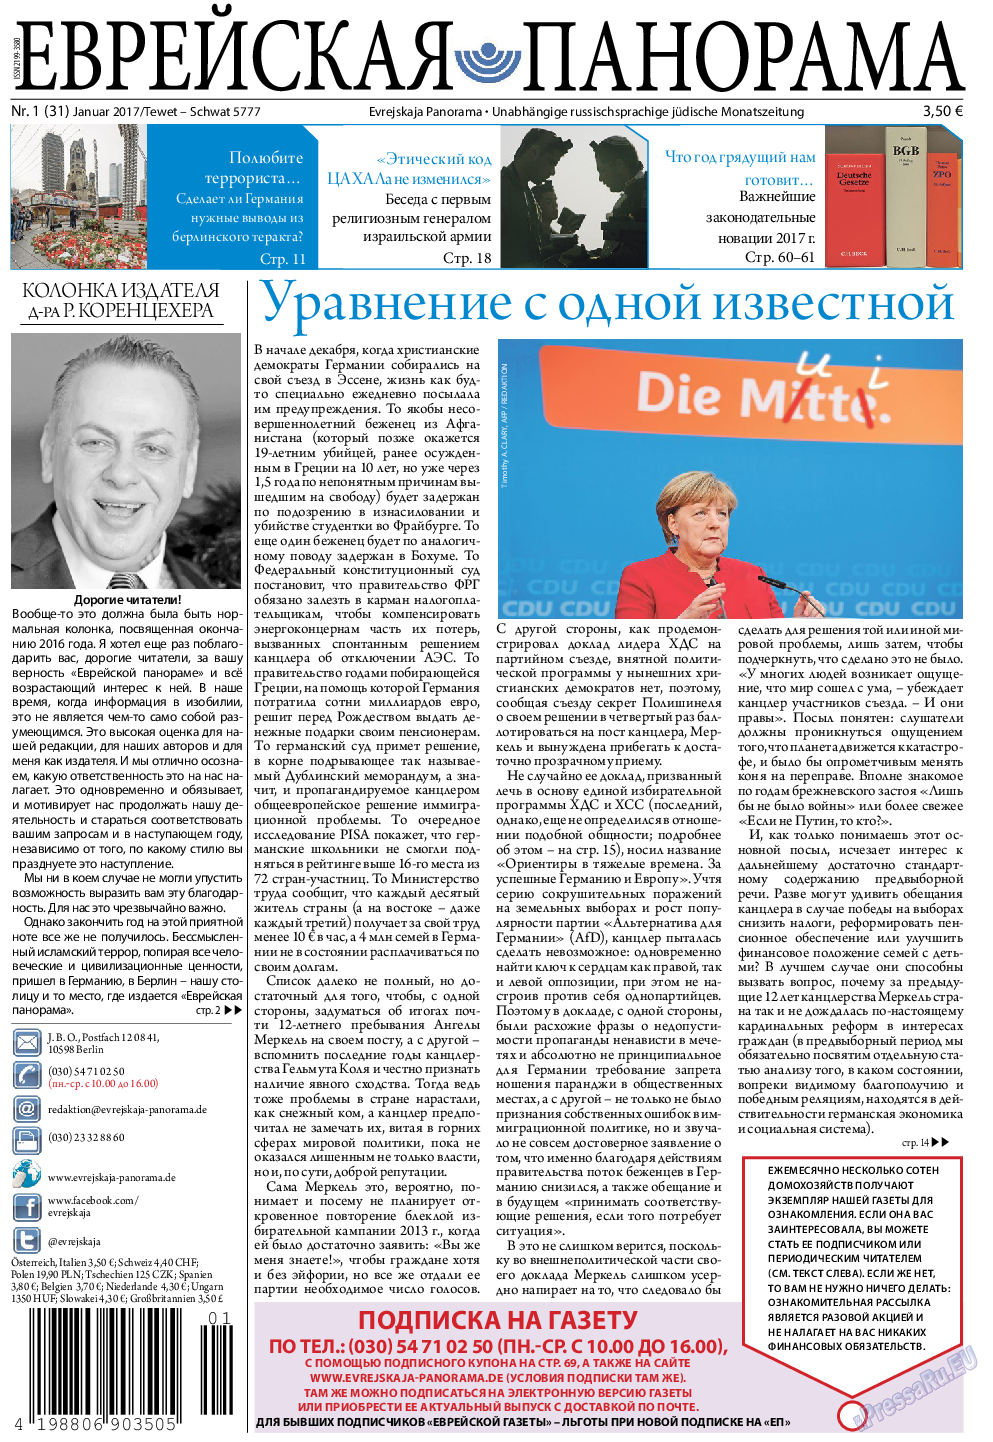 Еврейская панорама, газета. 2017 №1 стр.1